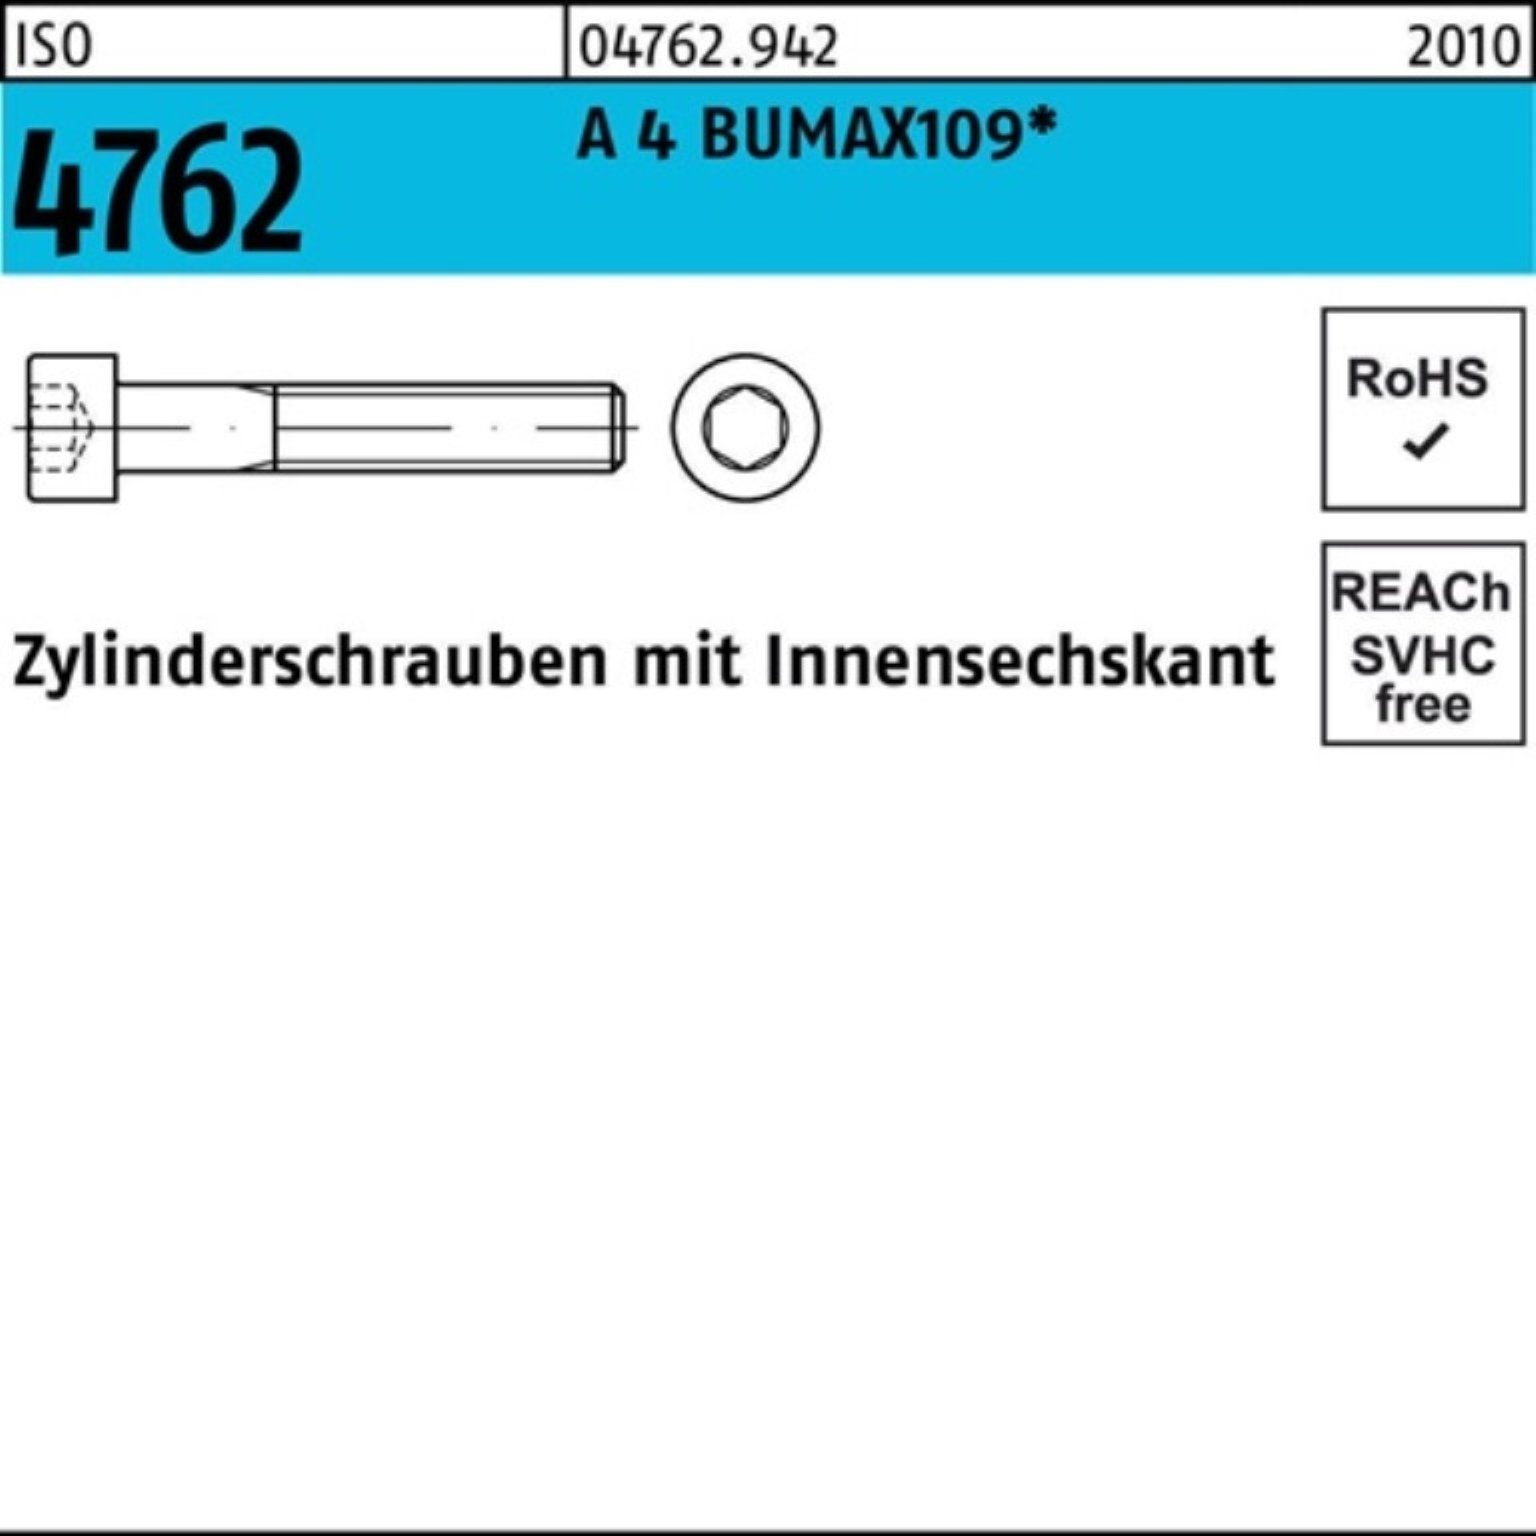 Bufab ISO 20 4 Innen-6kt Zylinderschraube 50 Zylinderschraube A 100er 4762 BUMAX109 M8x Pack